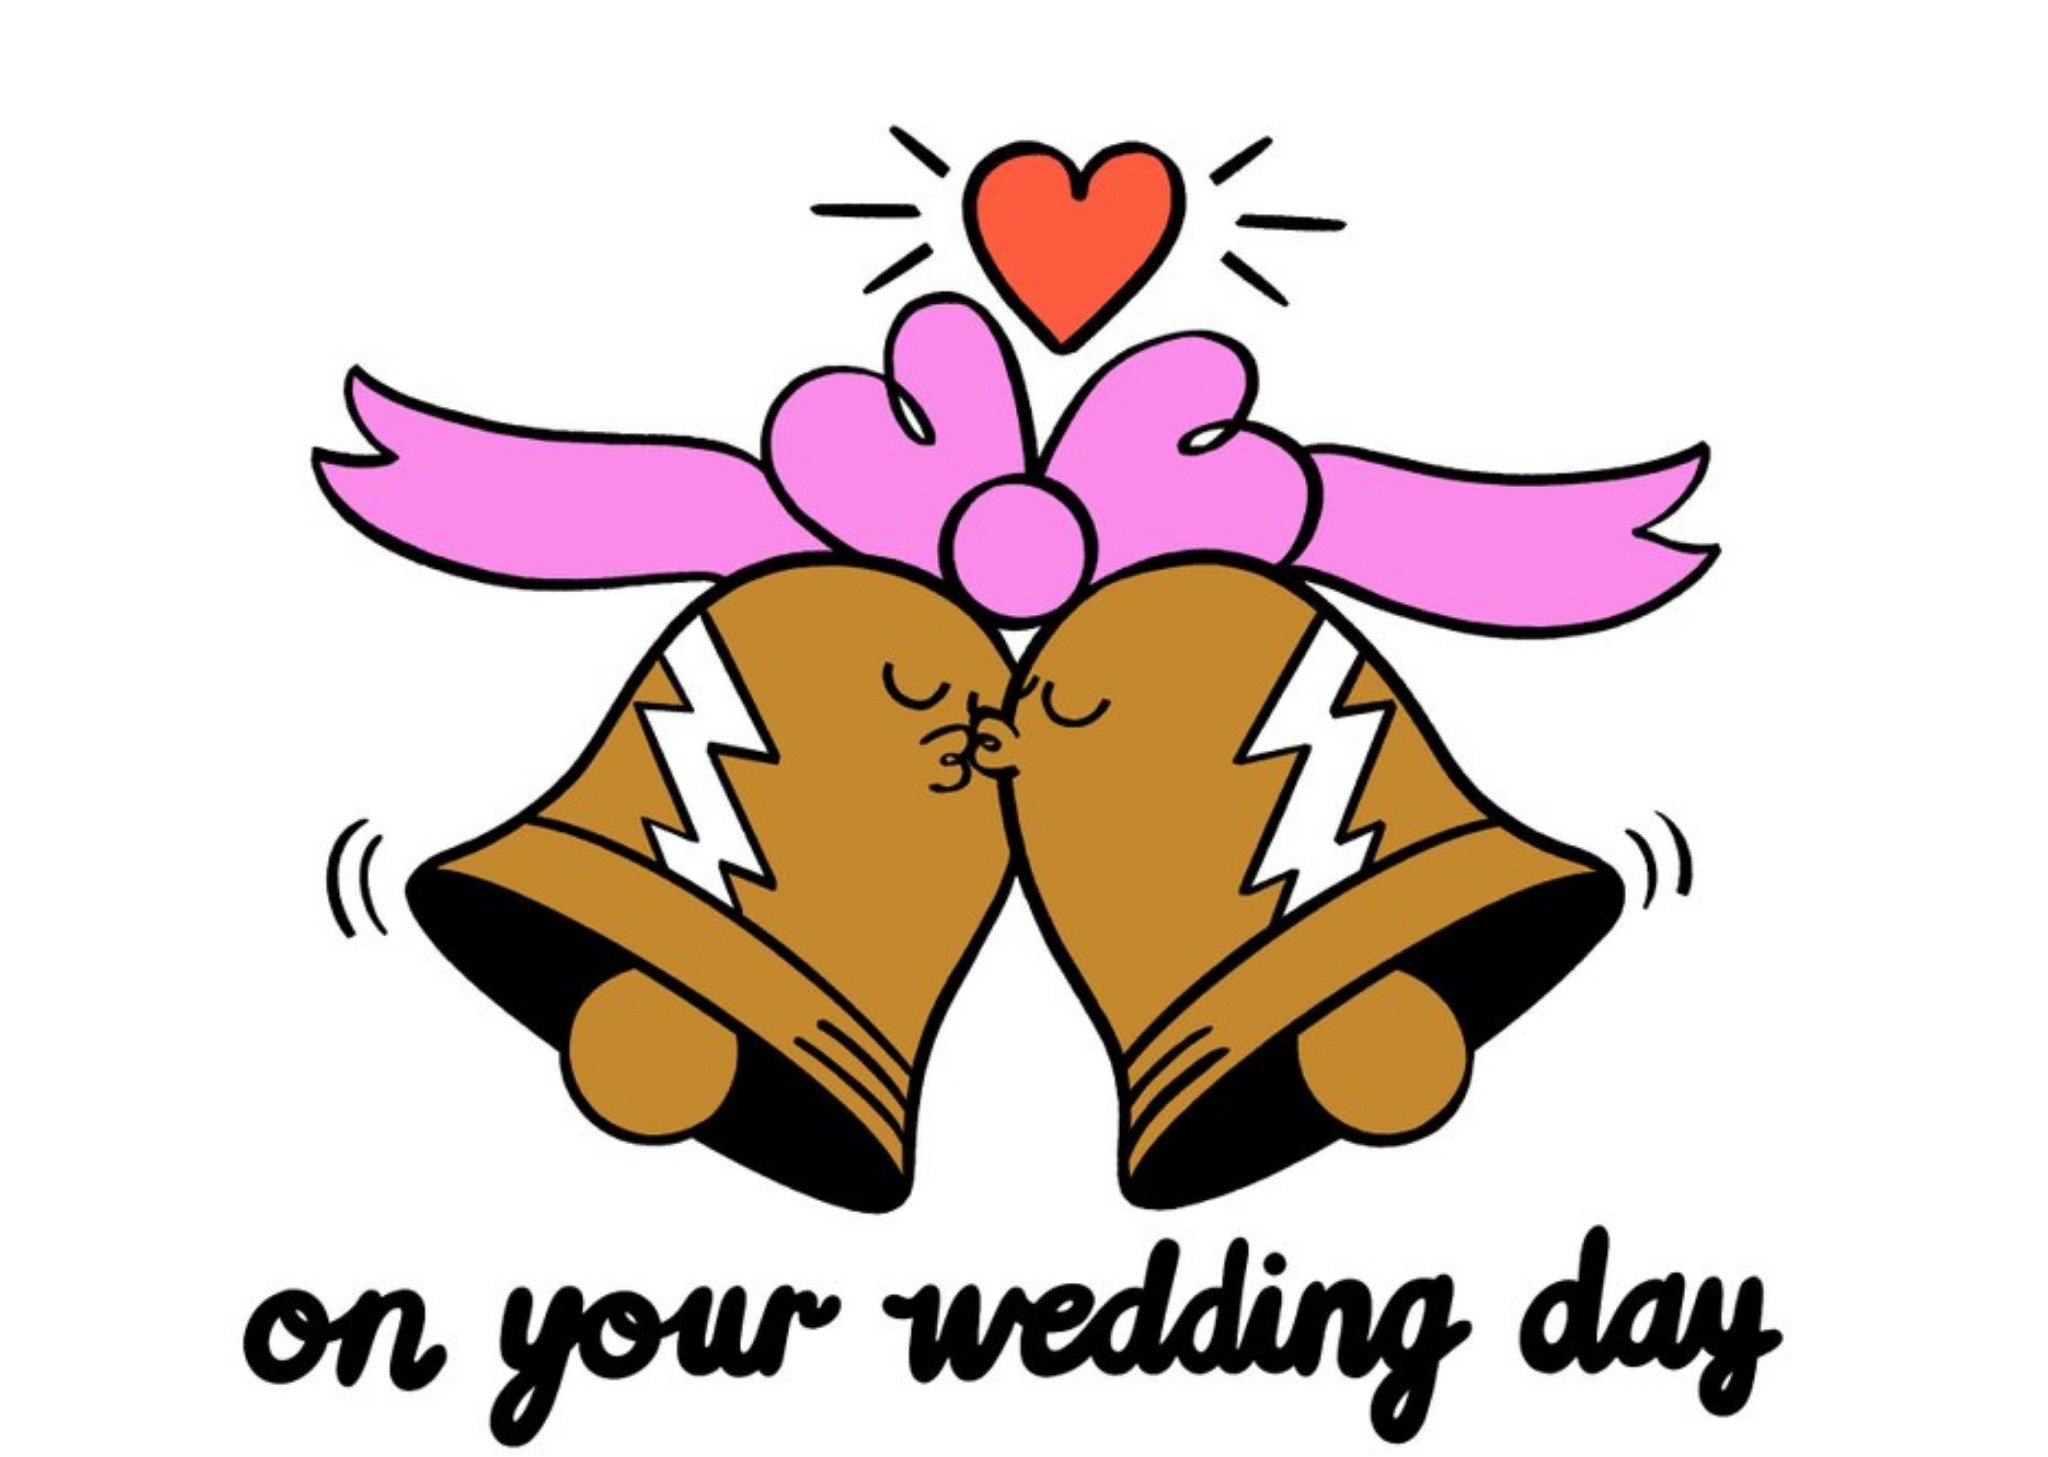 Love Hearts Jacky Sheridan Illustration Wedding Couple Irish Card Ecard